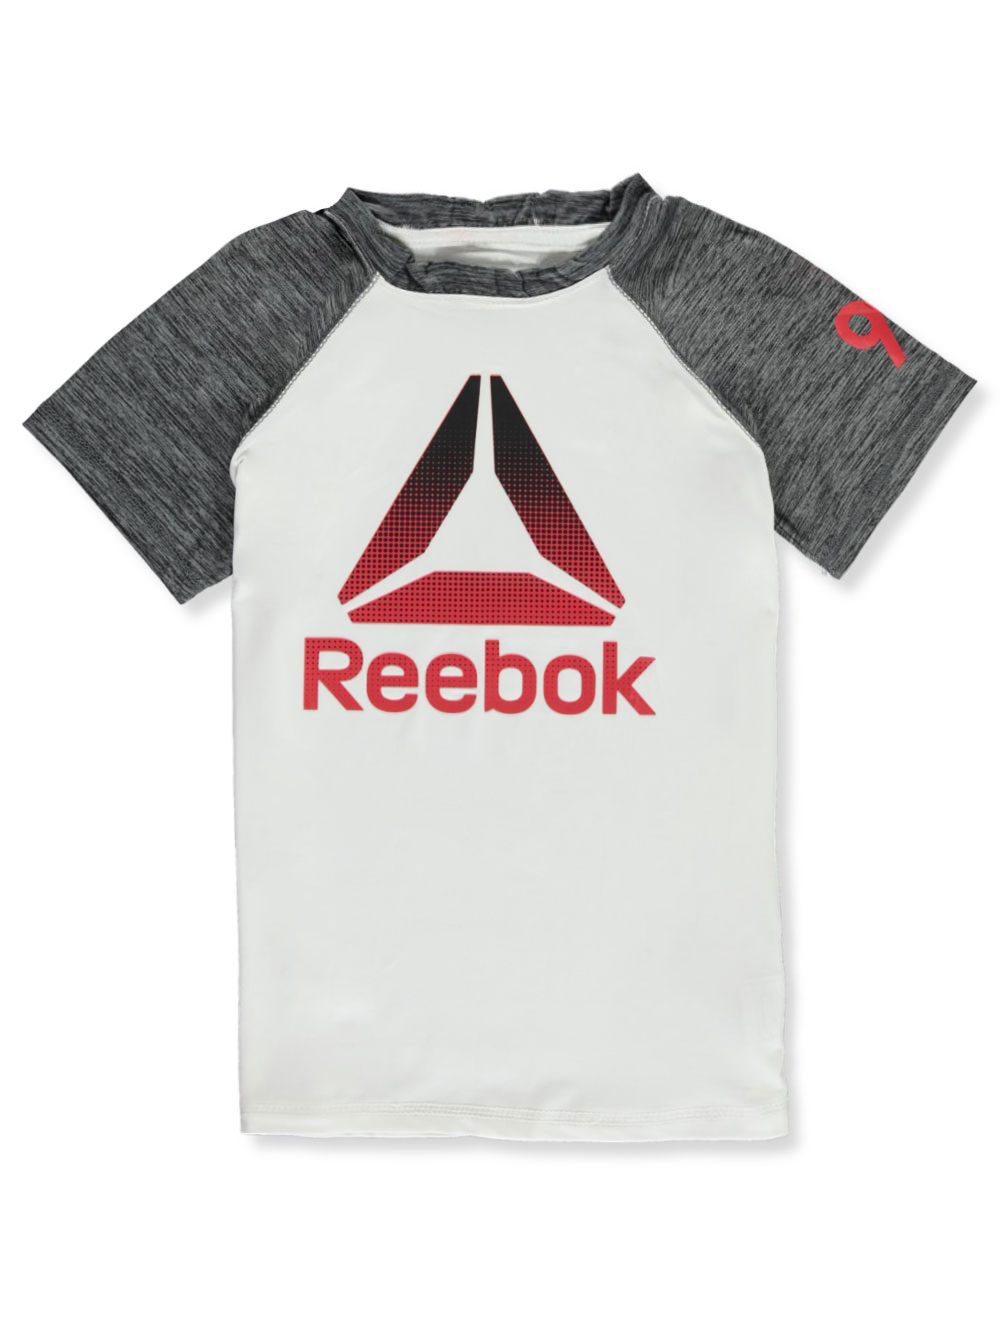 reebok t shirts for kids